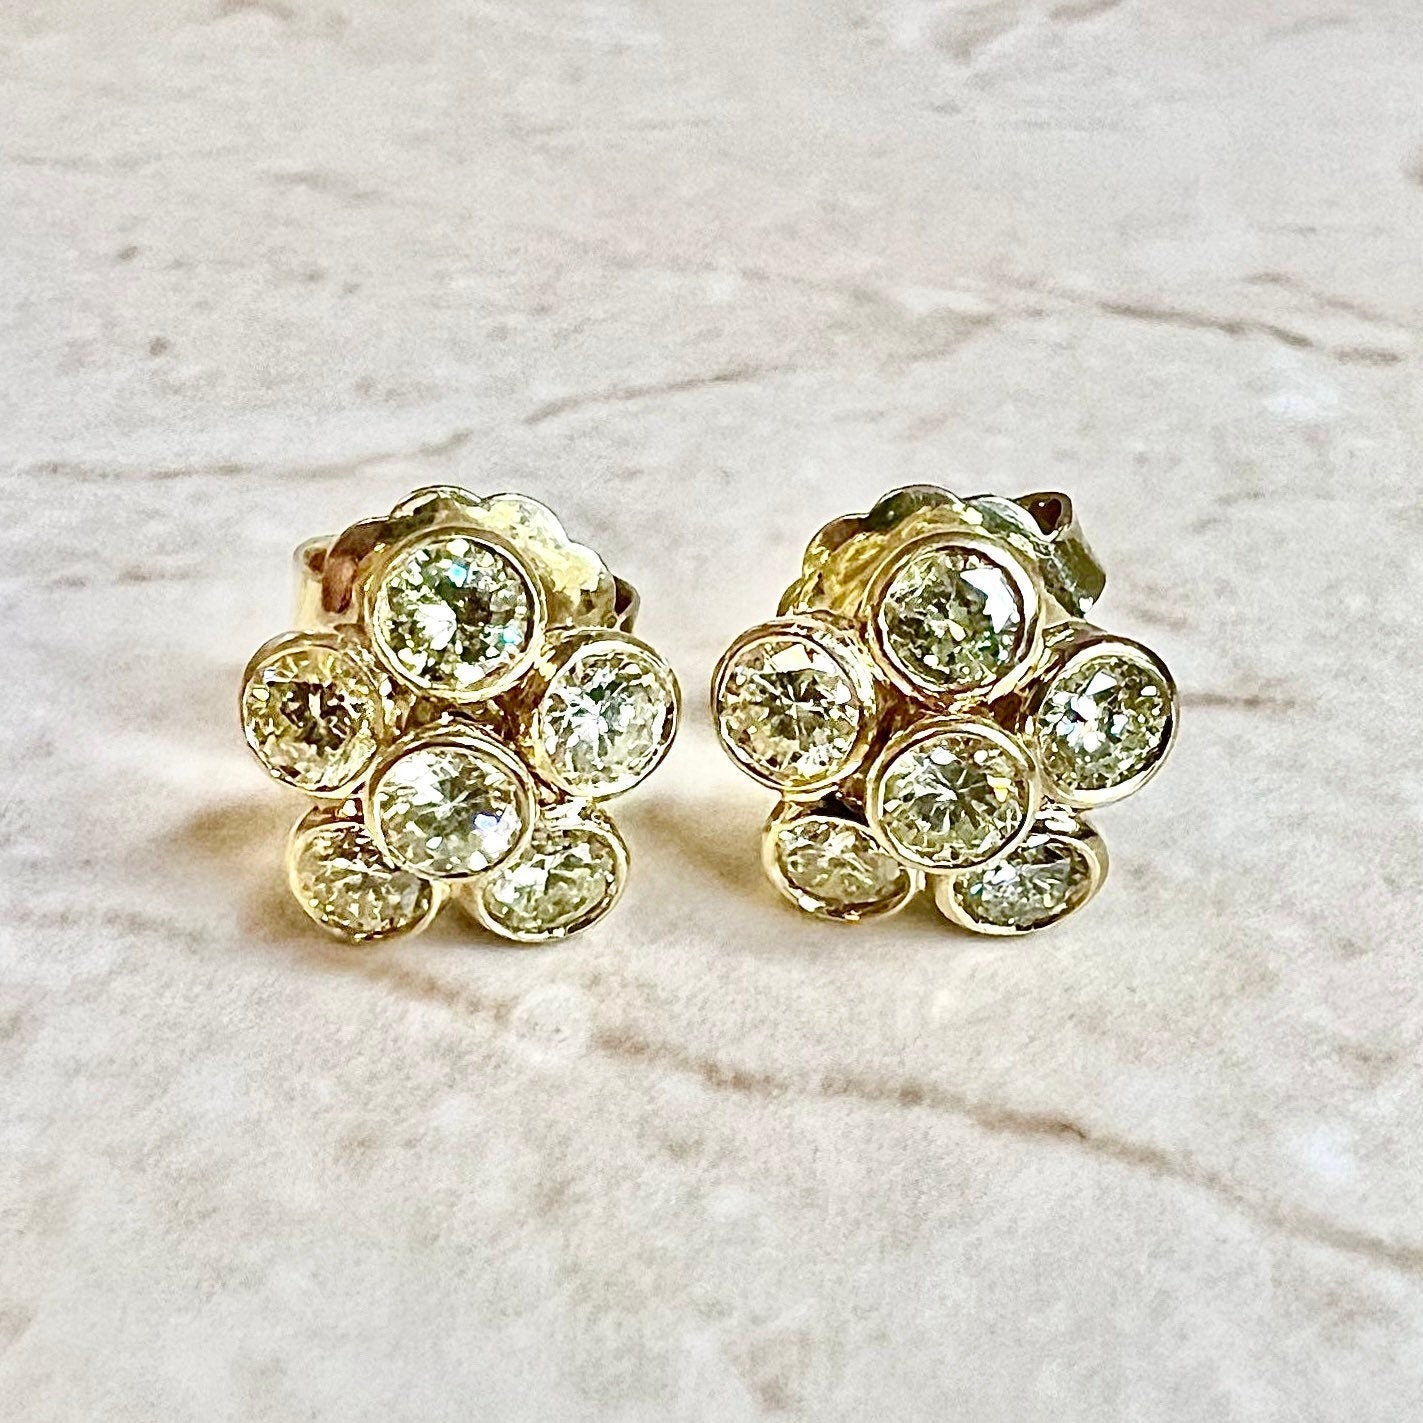 18K Convertible Yellow Diamond Halo Stud Earrings By Carvin French-Yellow Gold Diamond Halo Earrings-Diamond Studs-Diamond Cluster Earrings